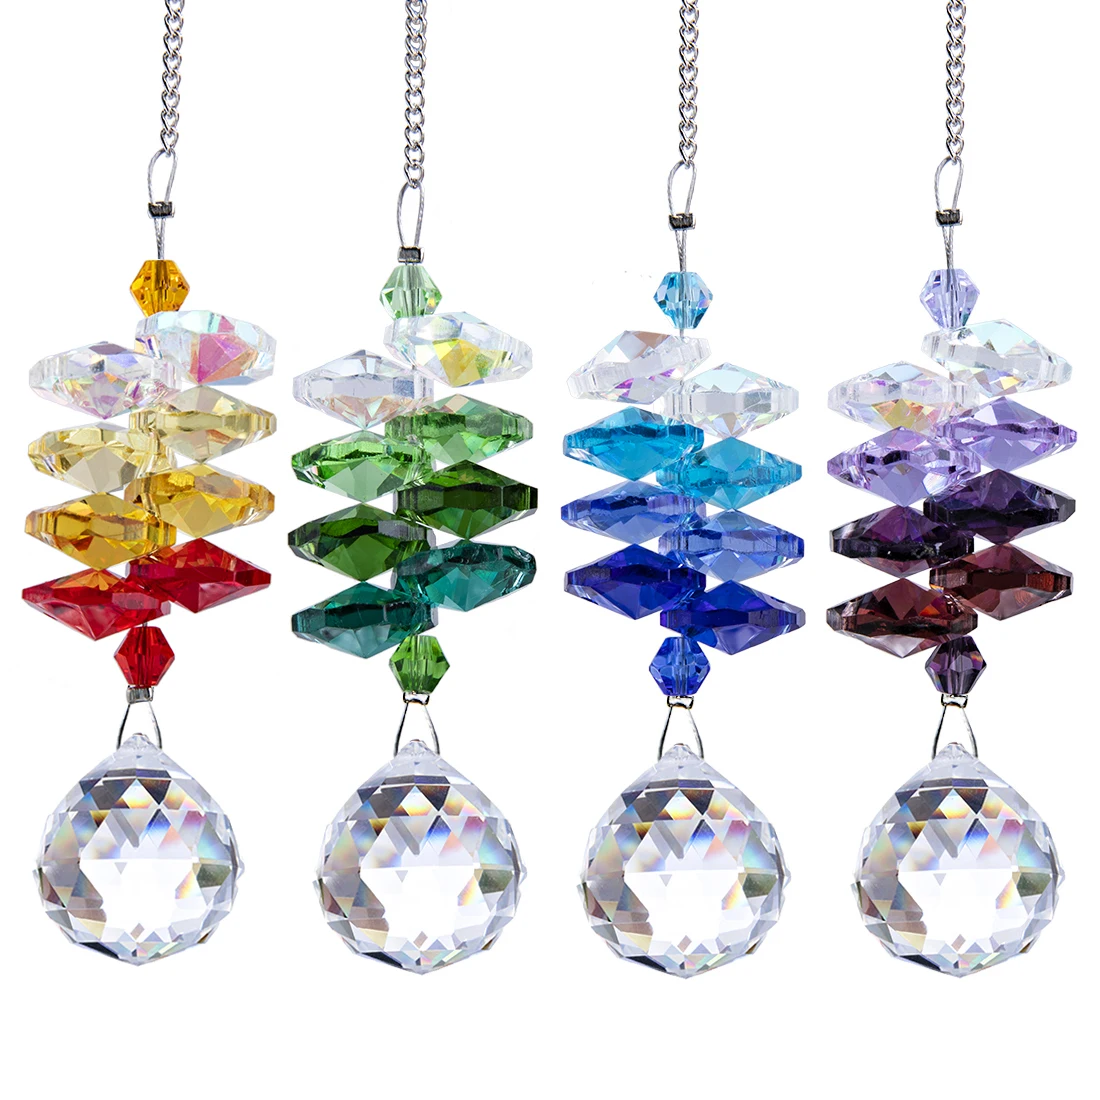 Details about   Hanging Ornament Crystal Pendant Octagonal Balls Garden Decor Office Suncatcher 